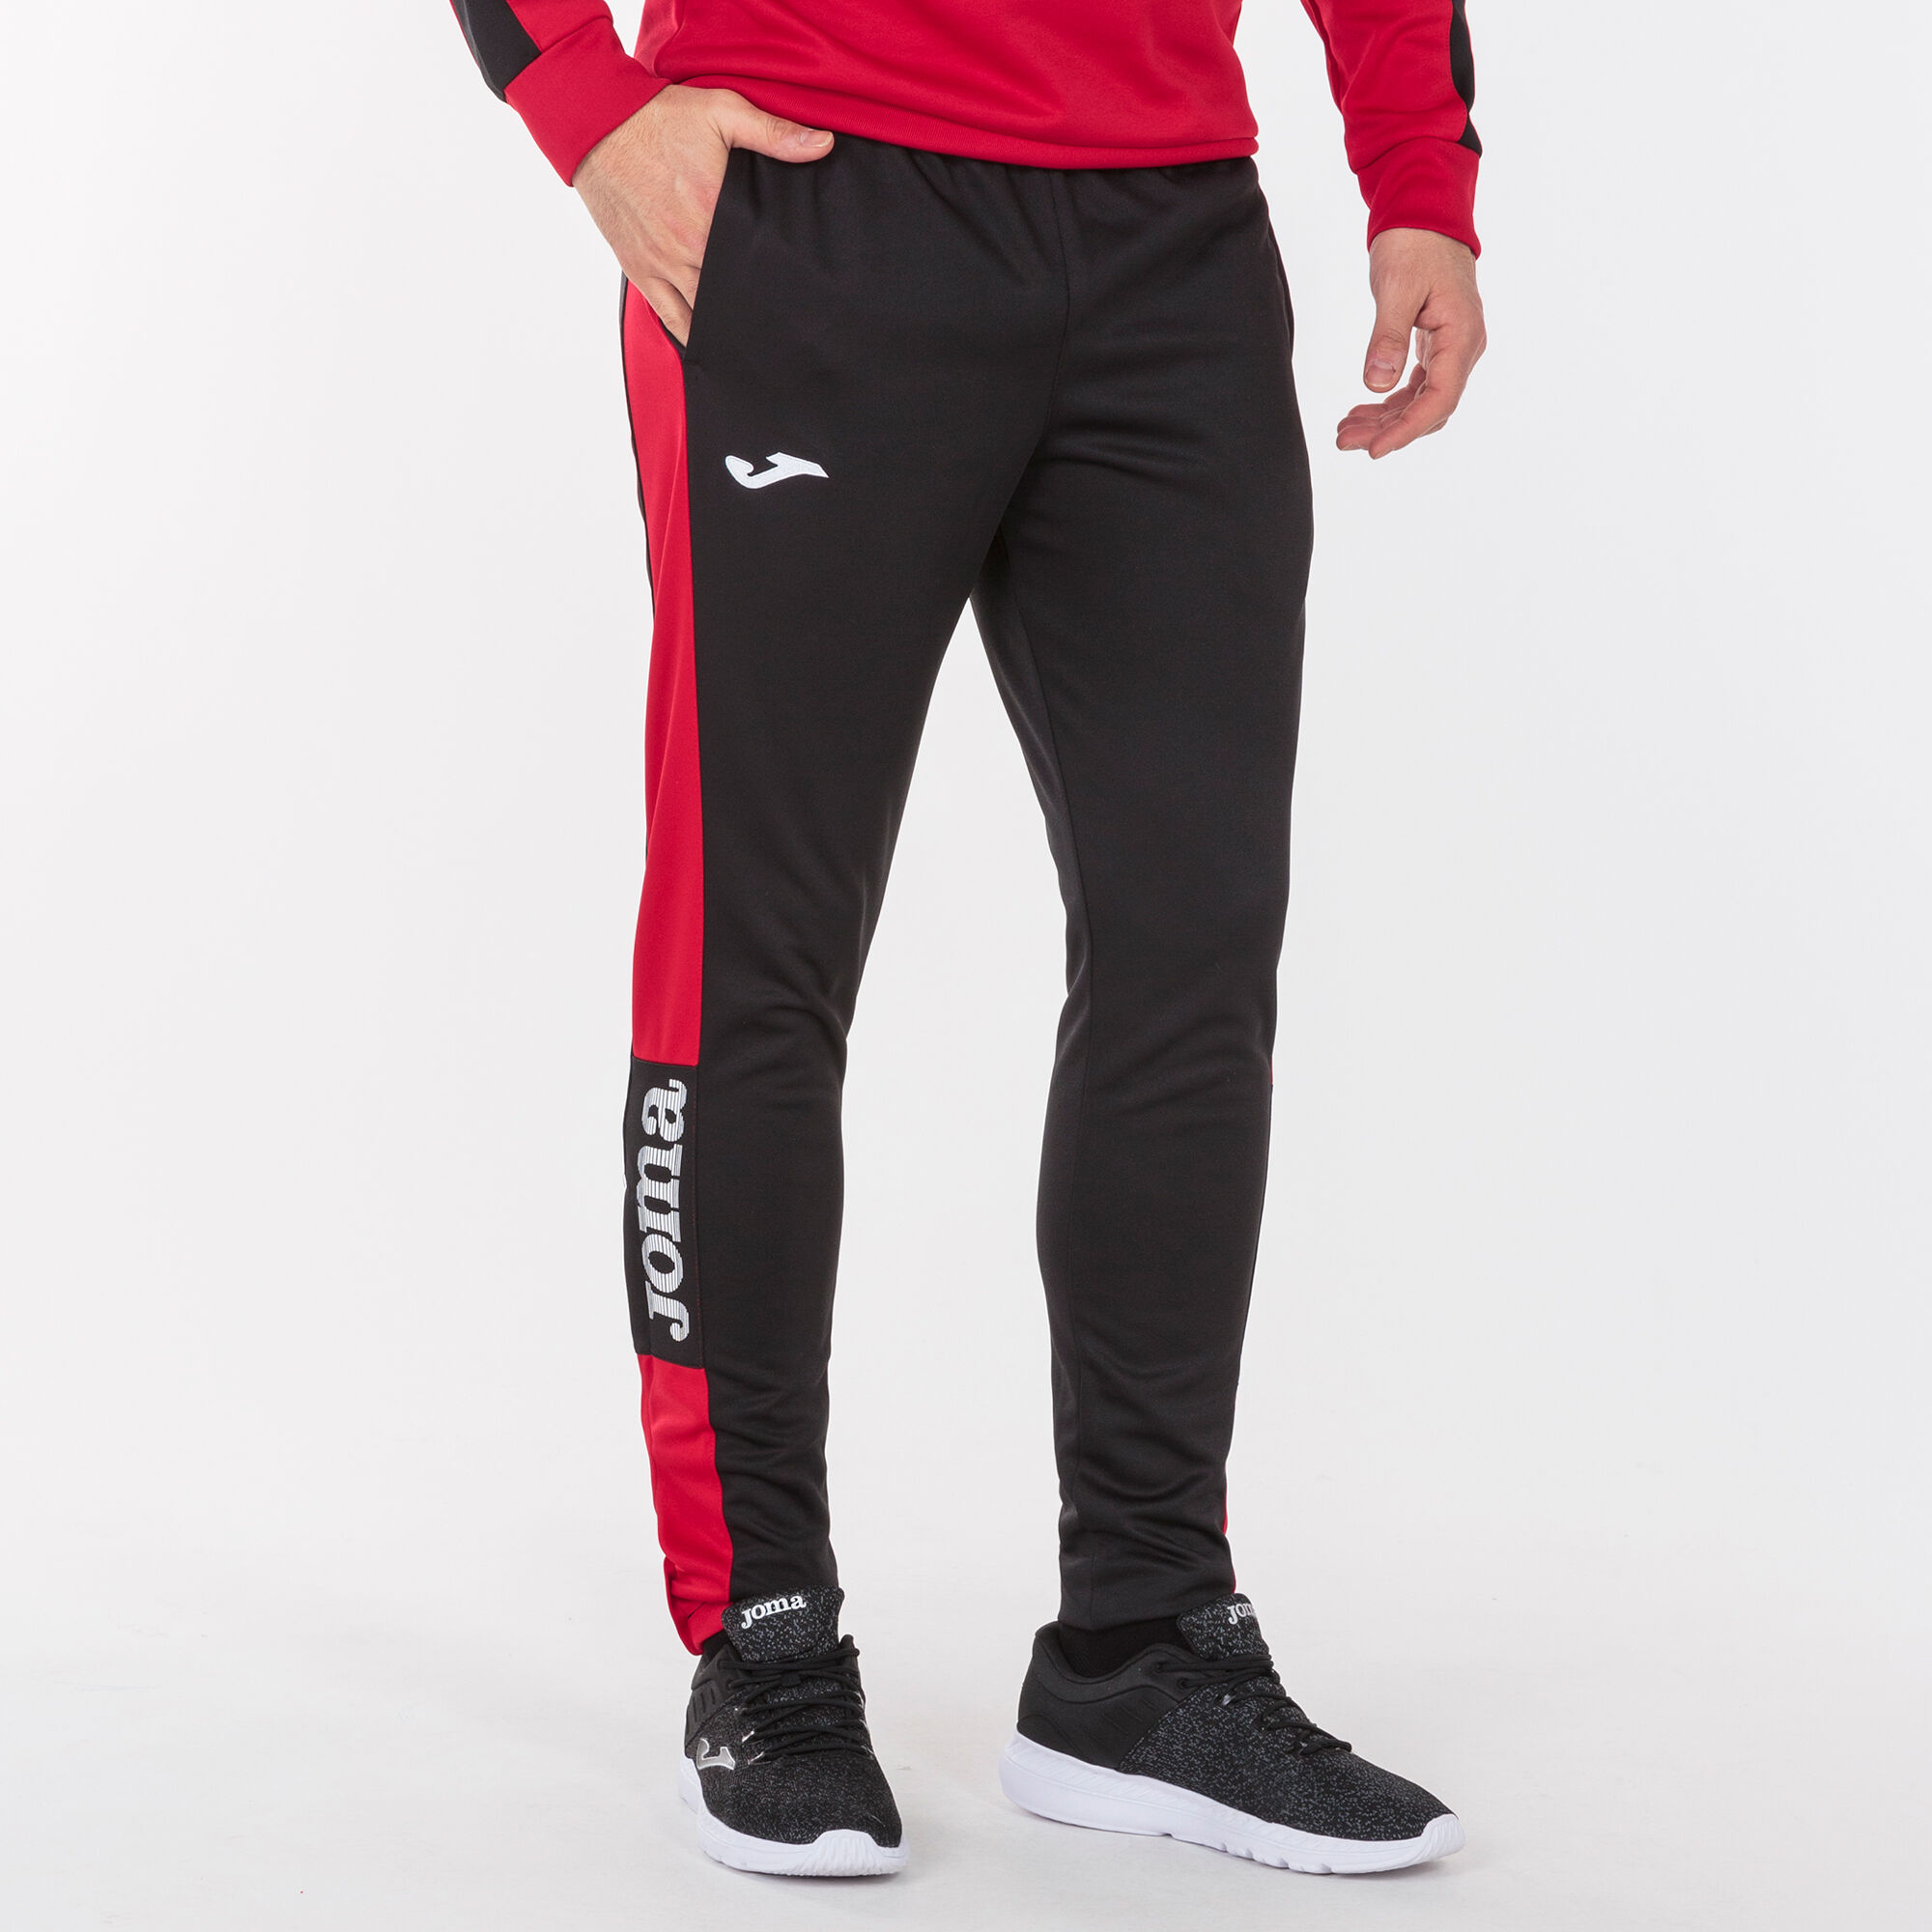 JOMA - Pantalón largo negro y rojo Championship IV Hombre